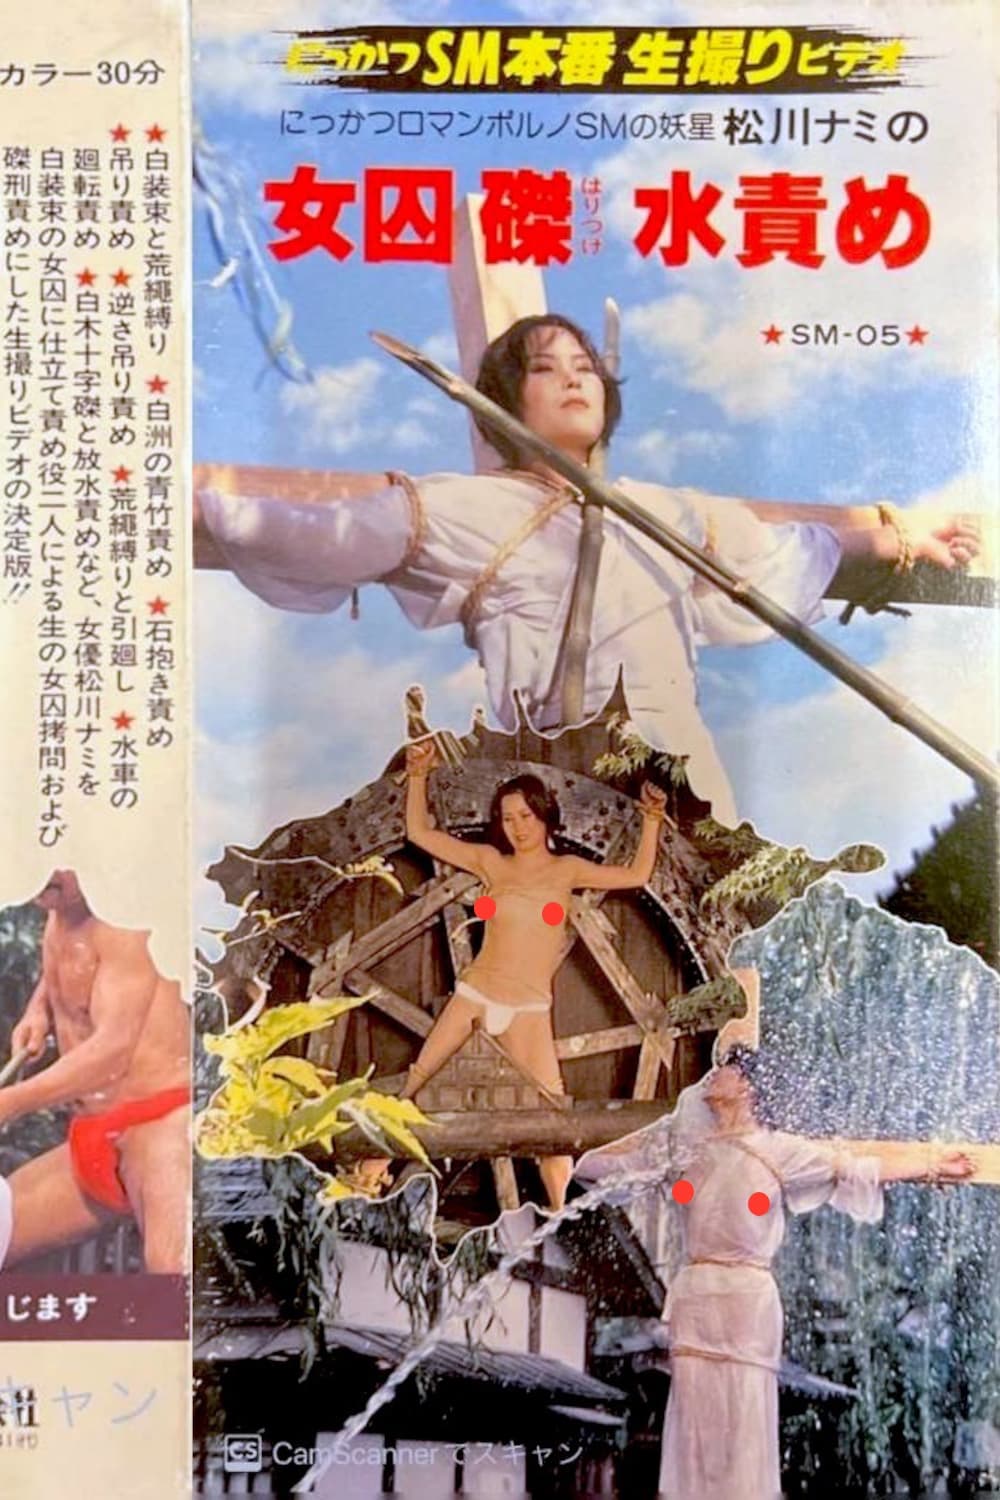 SM Monster: Nami Matsukawa's Female Prisoner Crucifixion Water Torture